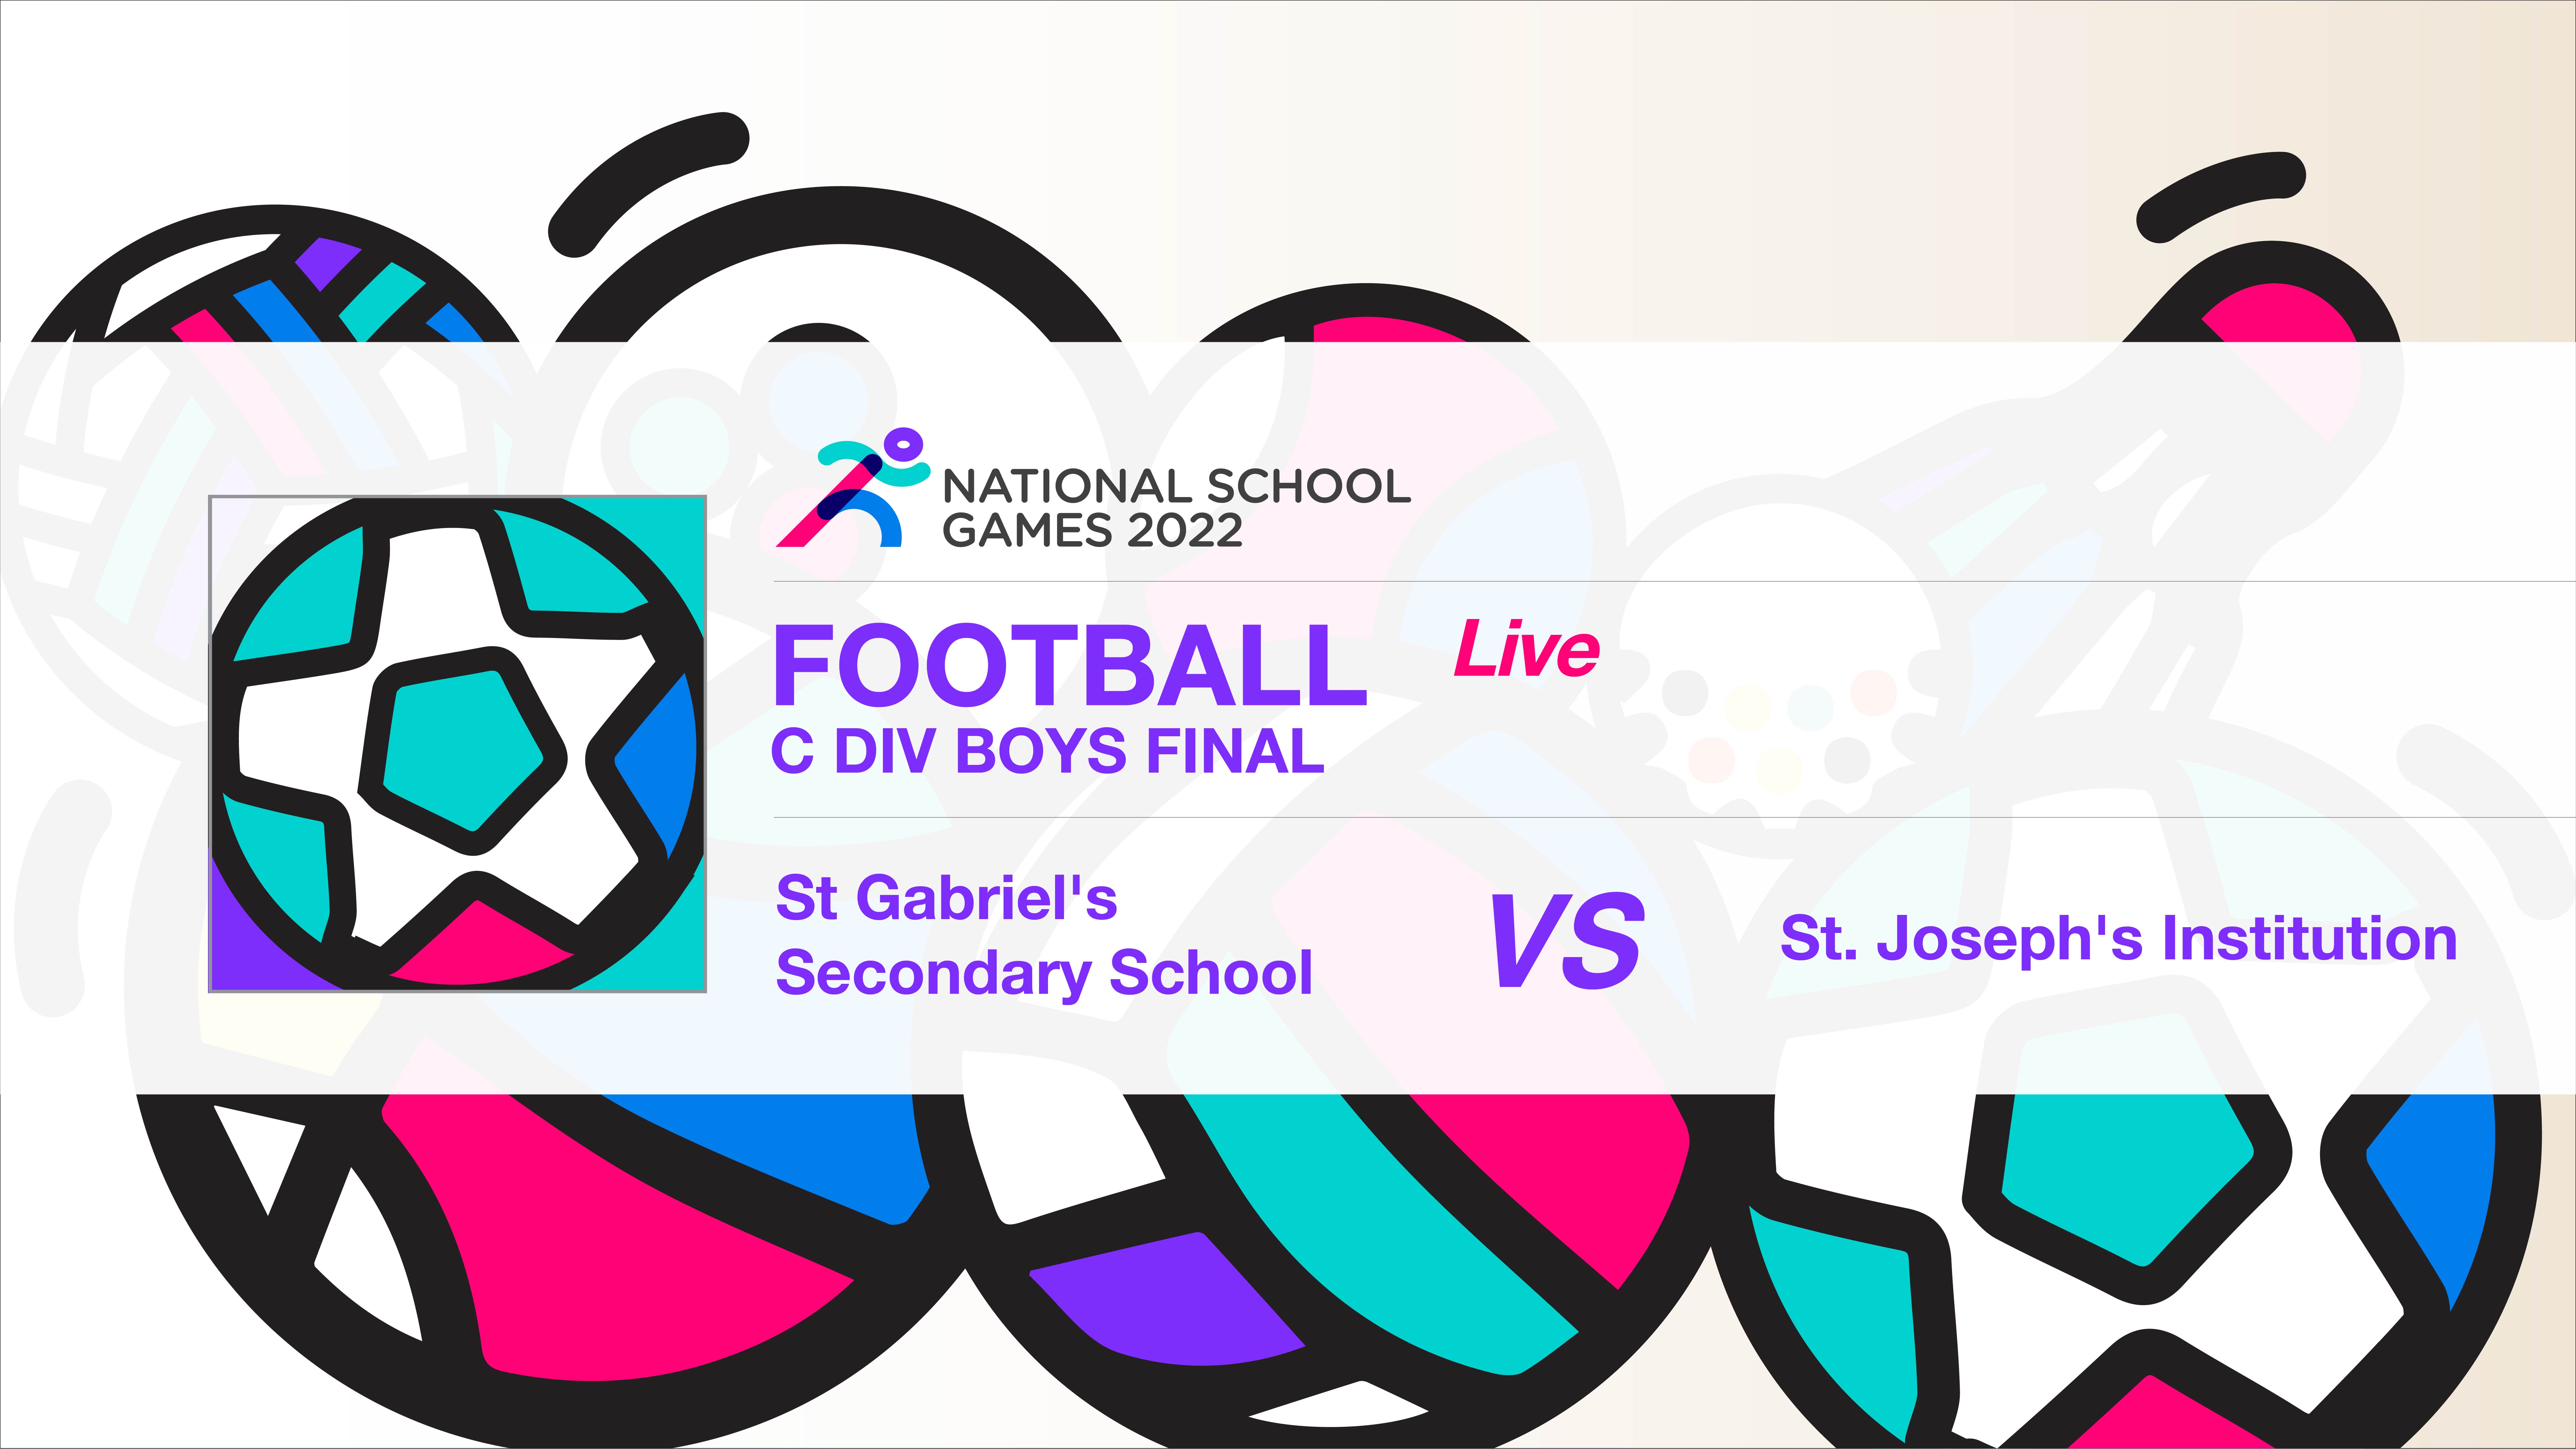 SSSC Football South Zone C Division Boys Final | St Gabriel's Secondary School vs St. Josephs's Institution